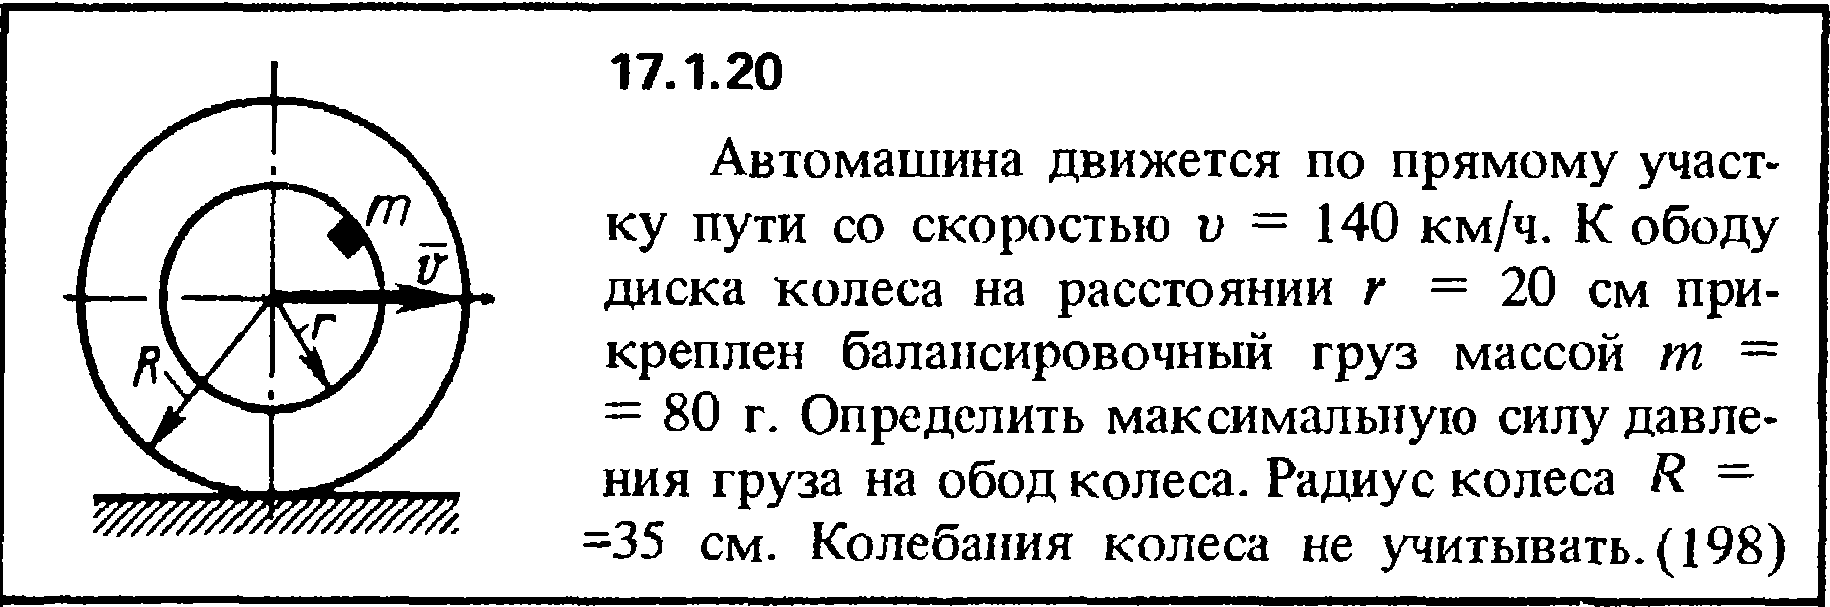 Решение задачи 17.1.20 из сборника Кепе О.Е. 1989 года